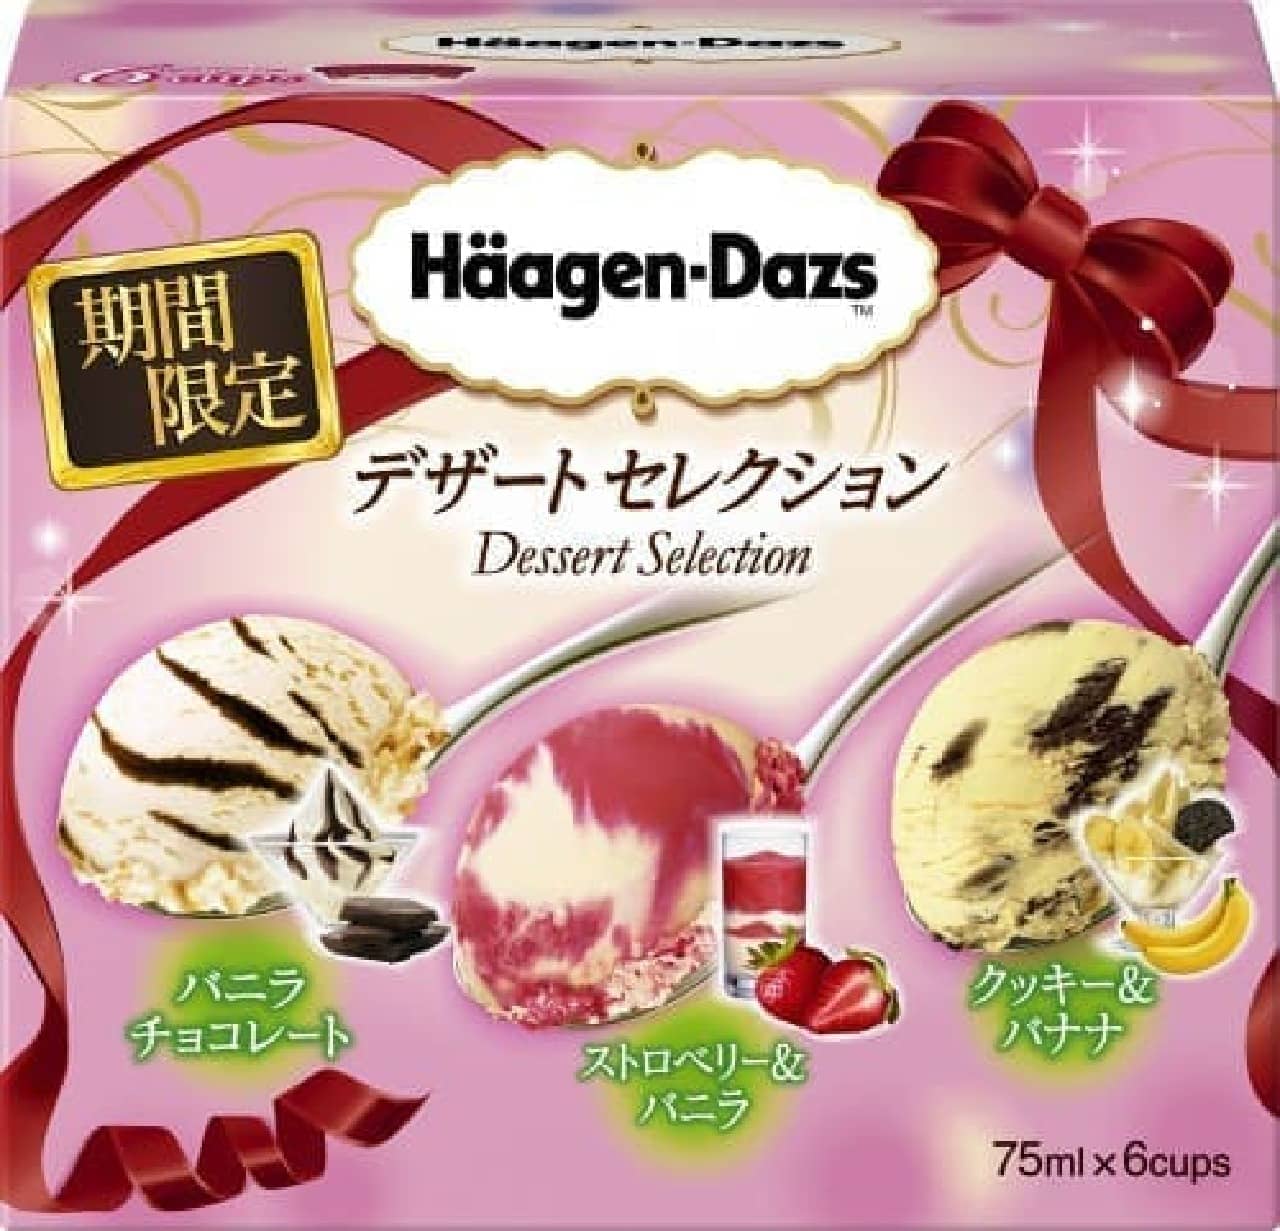 Haagen-Dazs "Haagen-Dazs Mini Cup Multipack 6 Pieces Dessert Selection"